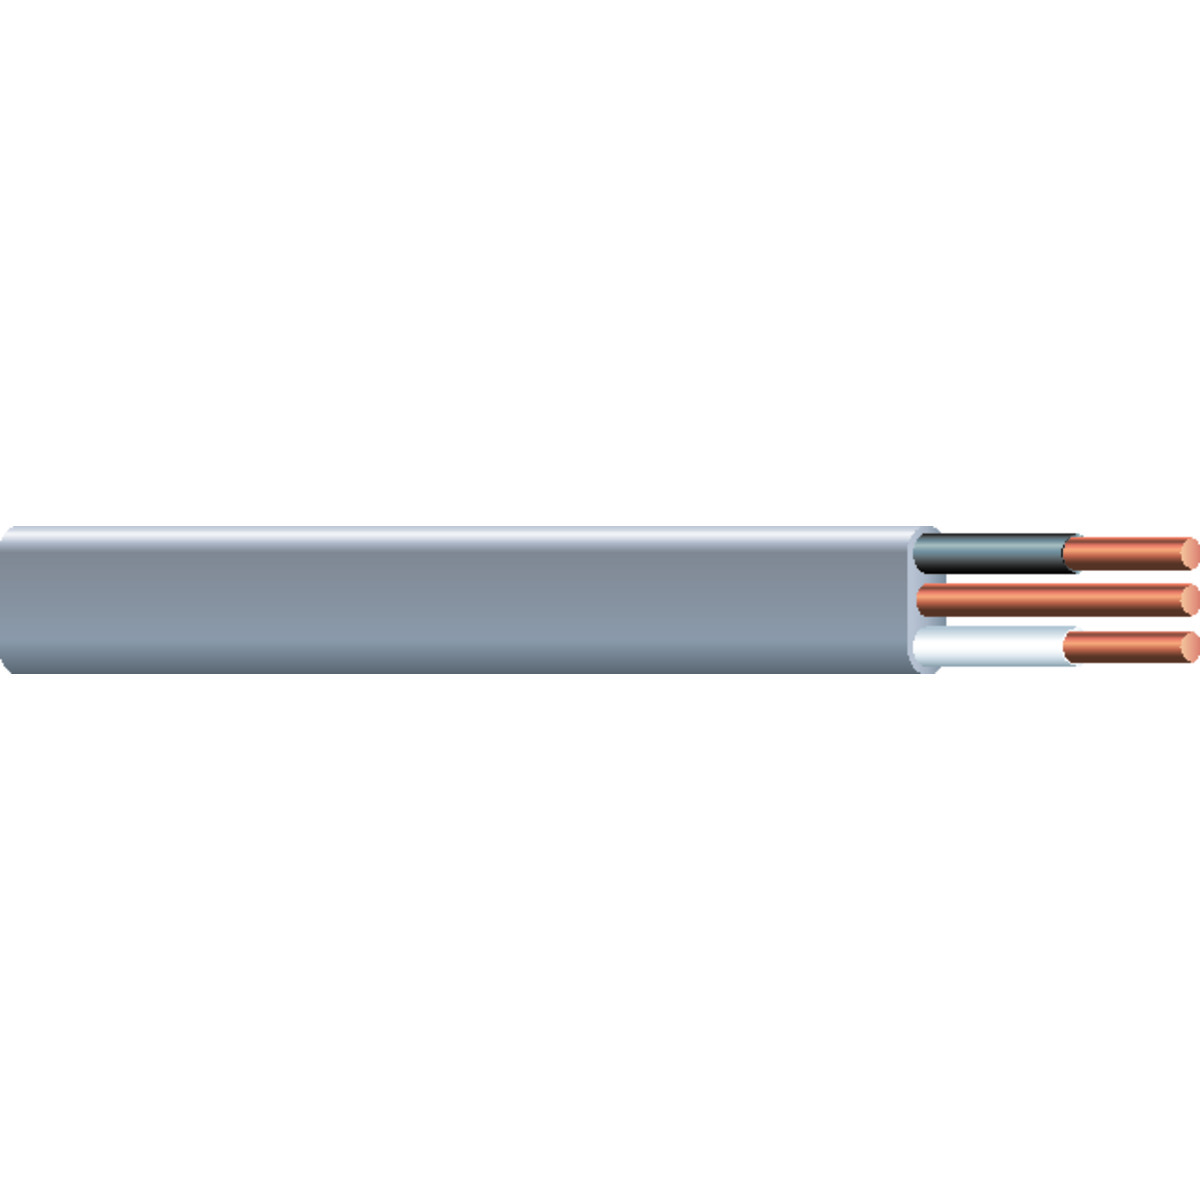 UF103WG500 - Uf-B 10/3WG Cable 500' - Copper